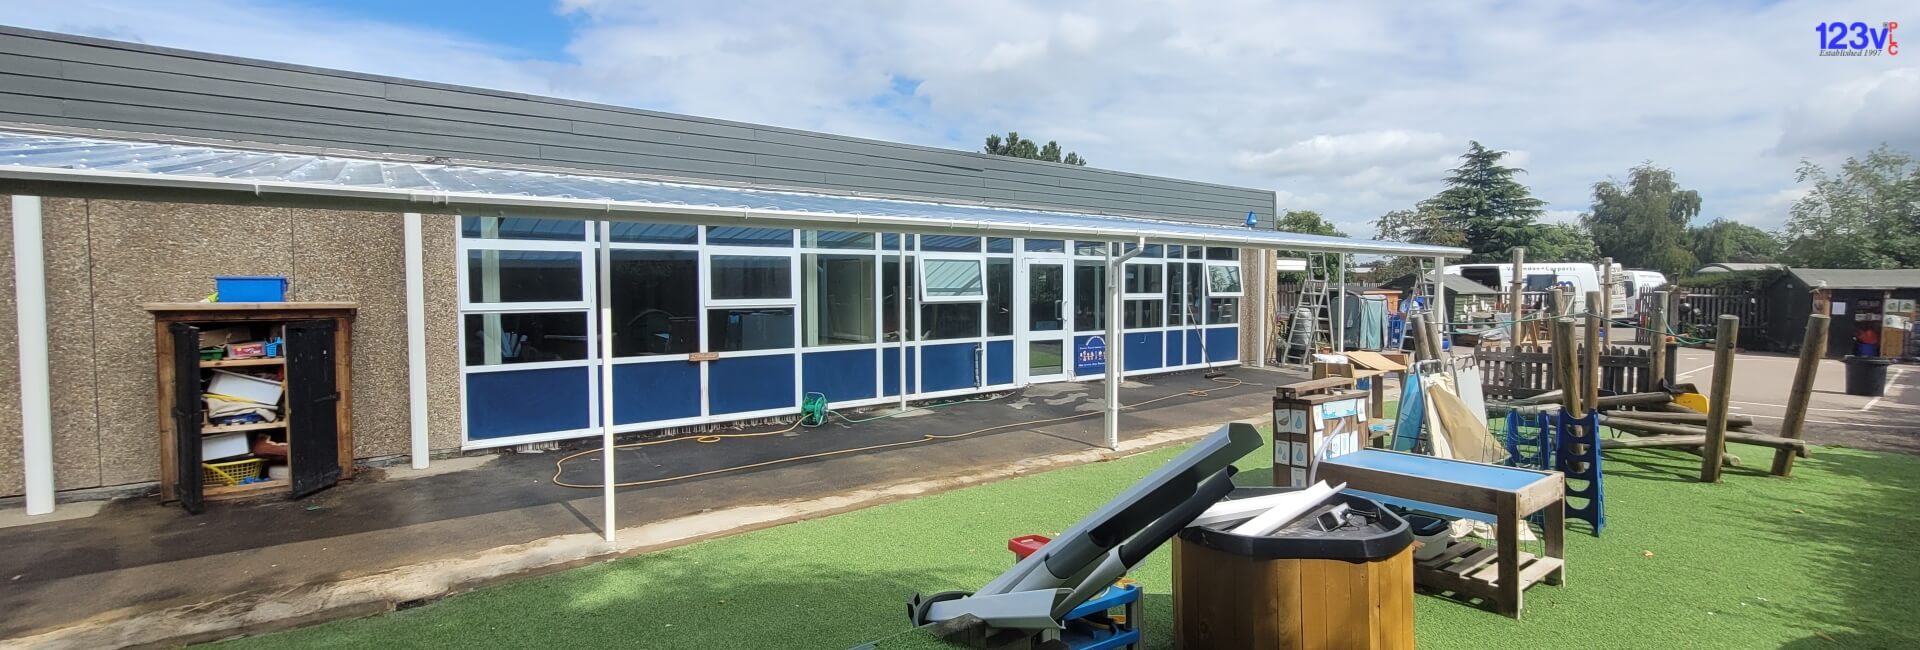 Canopies For Schools Hertford 123v UK